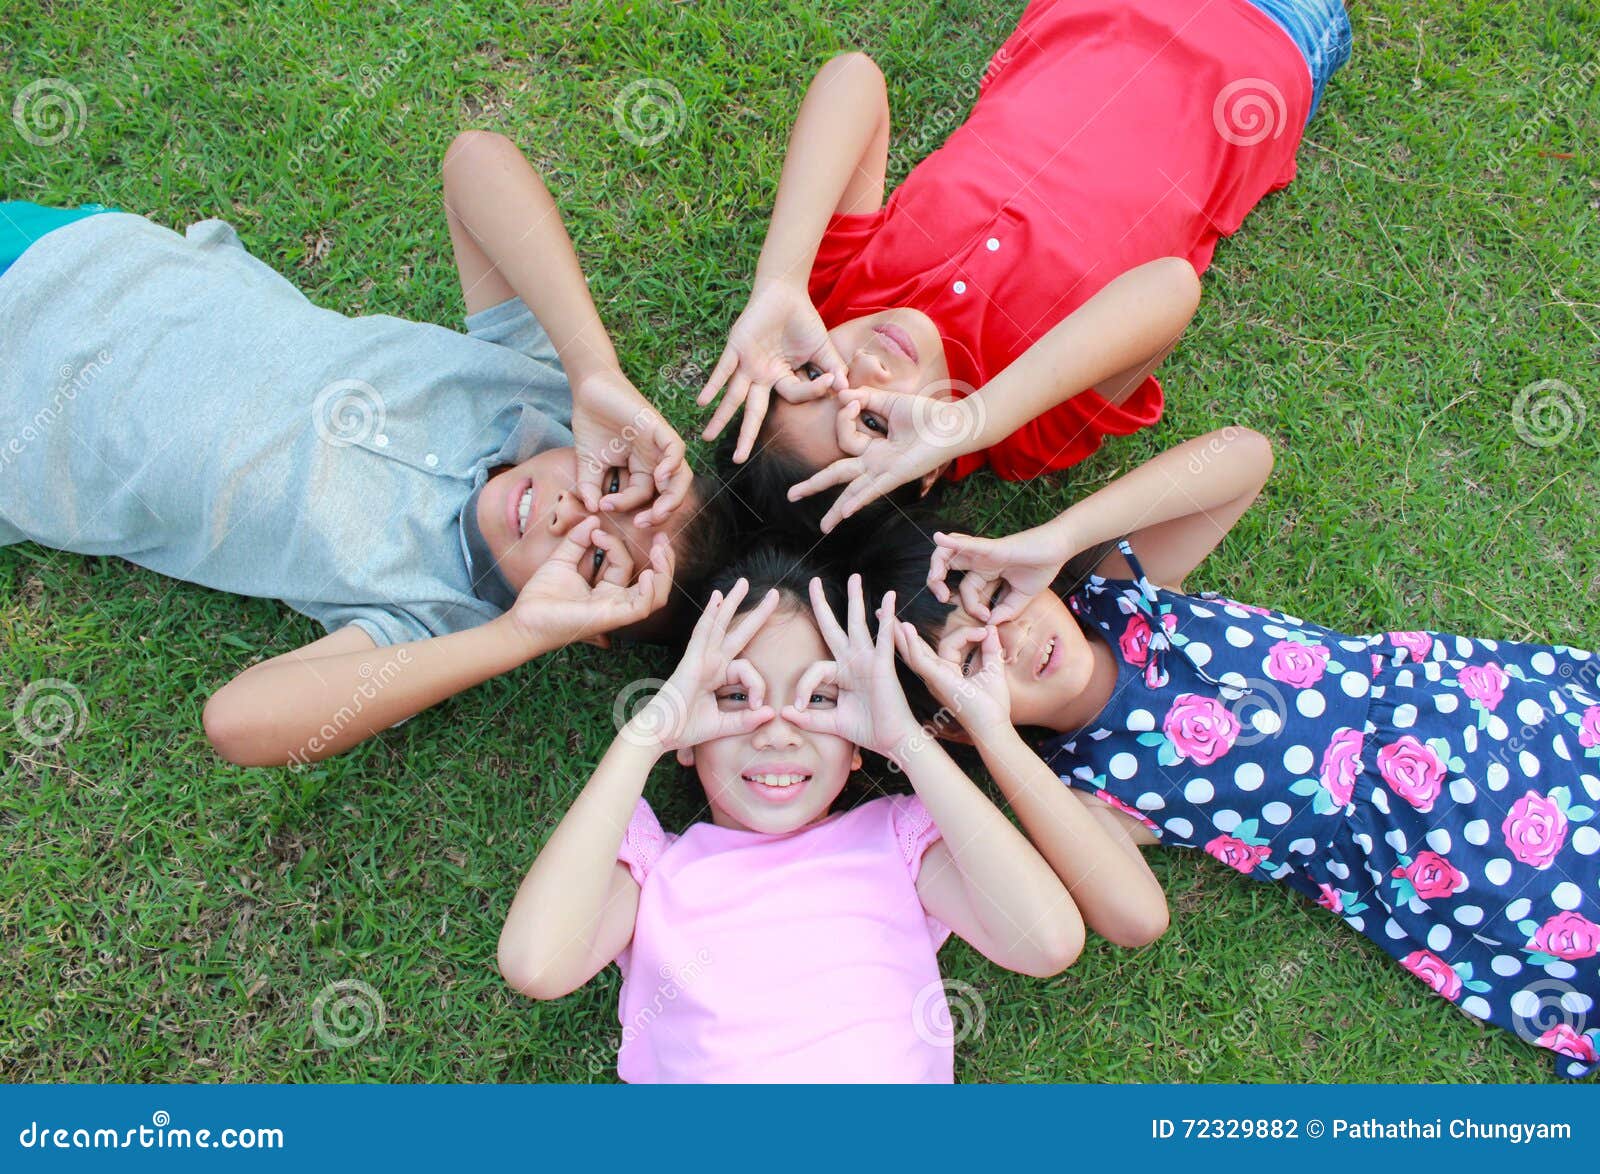 four kids having fun in the park.